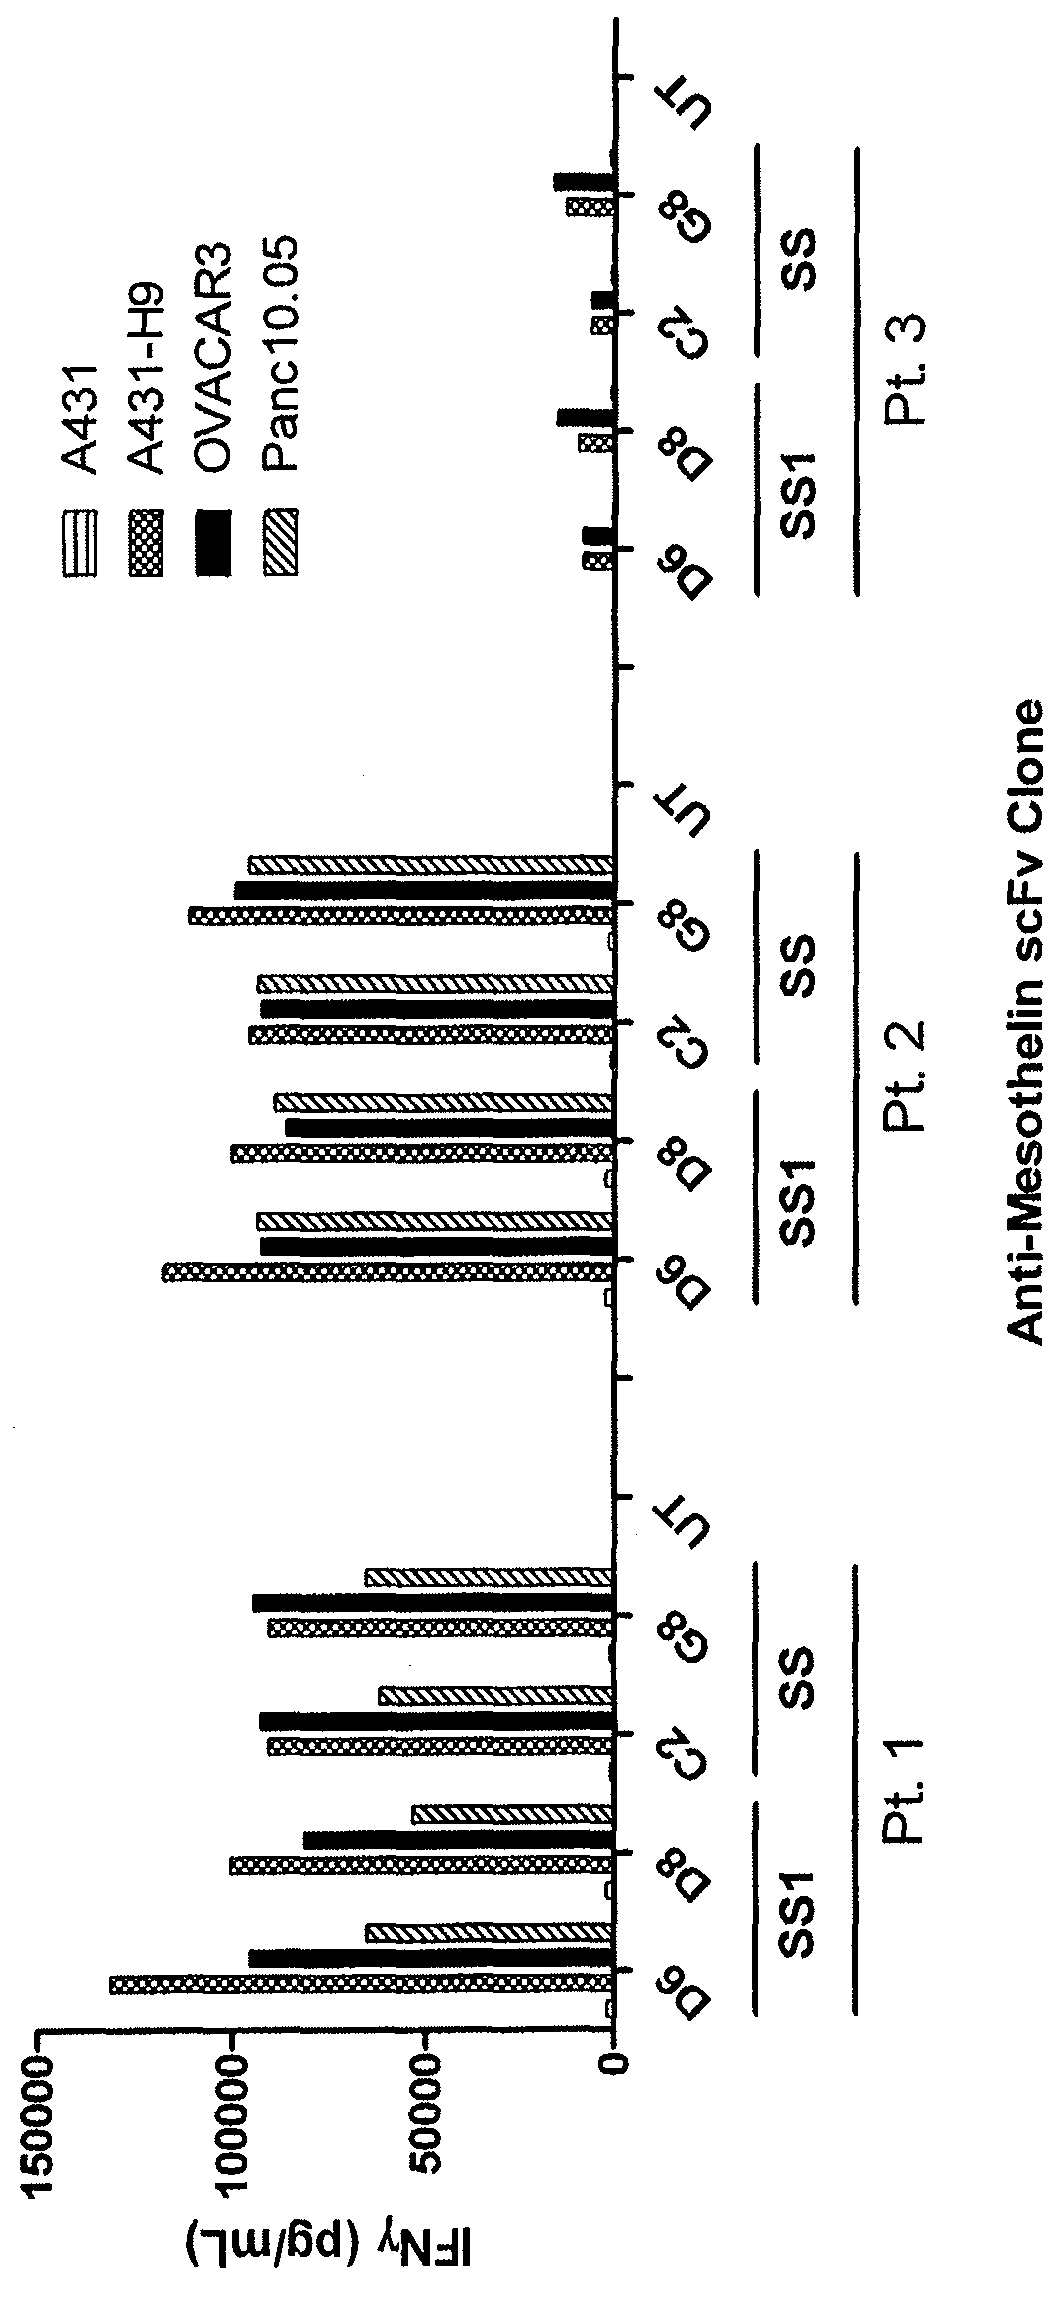 Anti-mesothelin chimeric antigen receptors